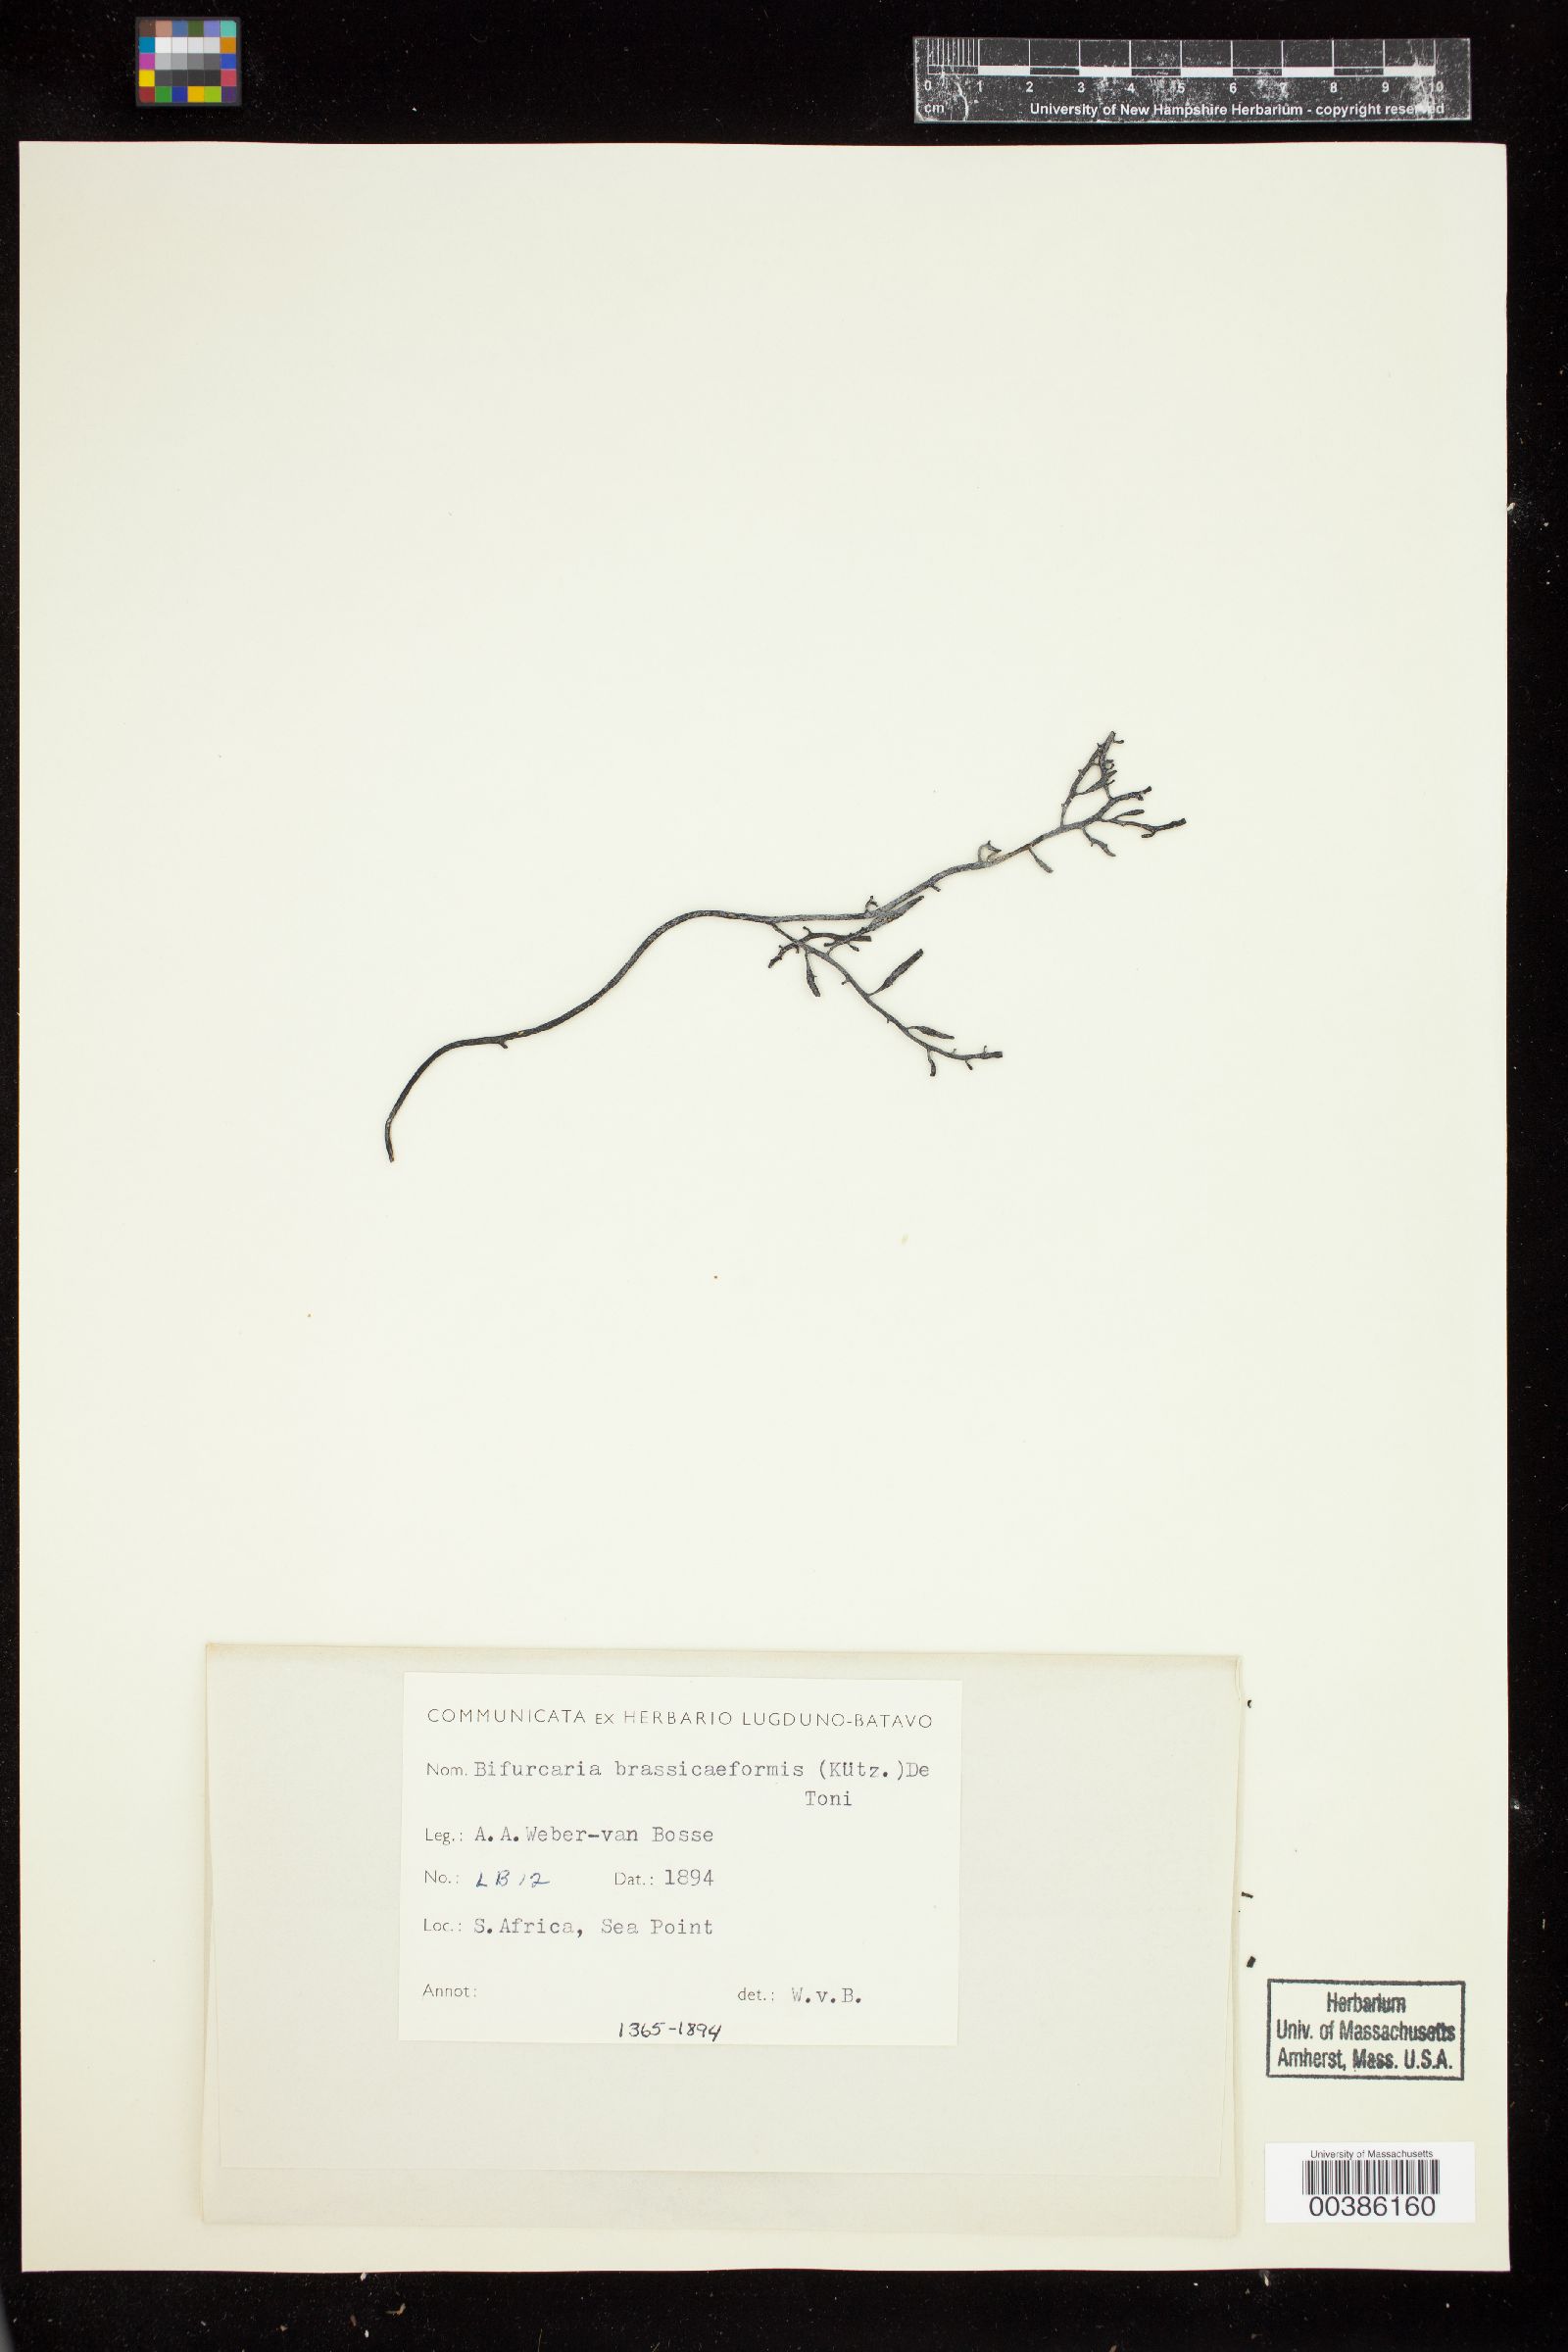 Brassicophycus image